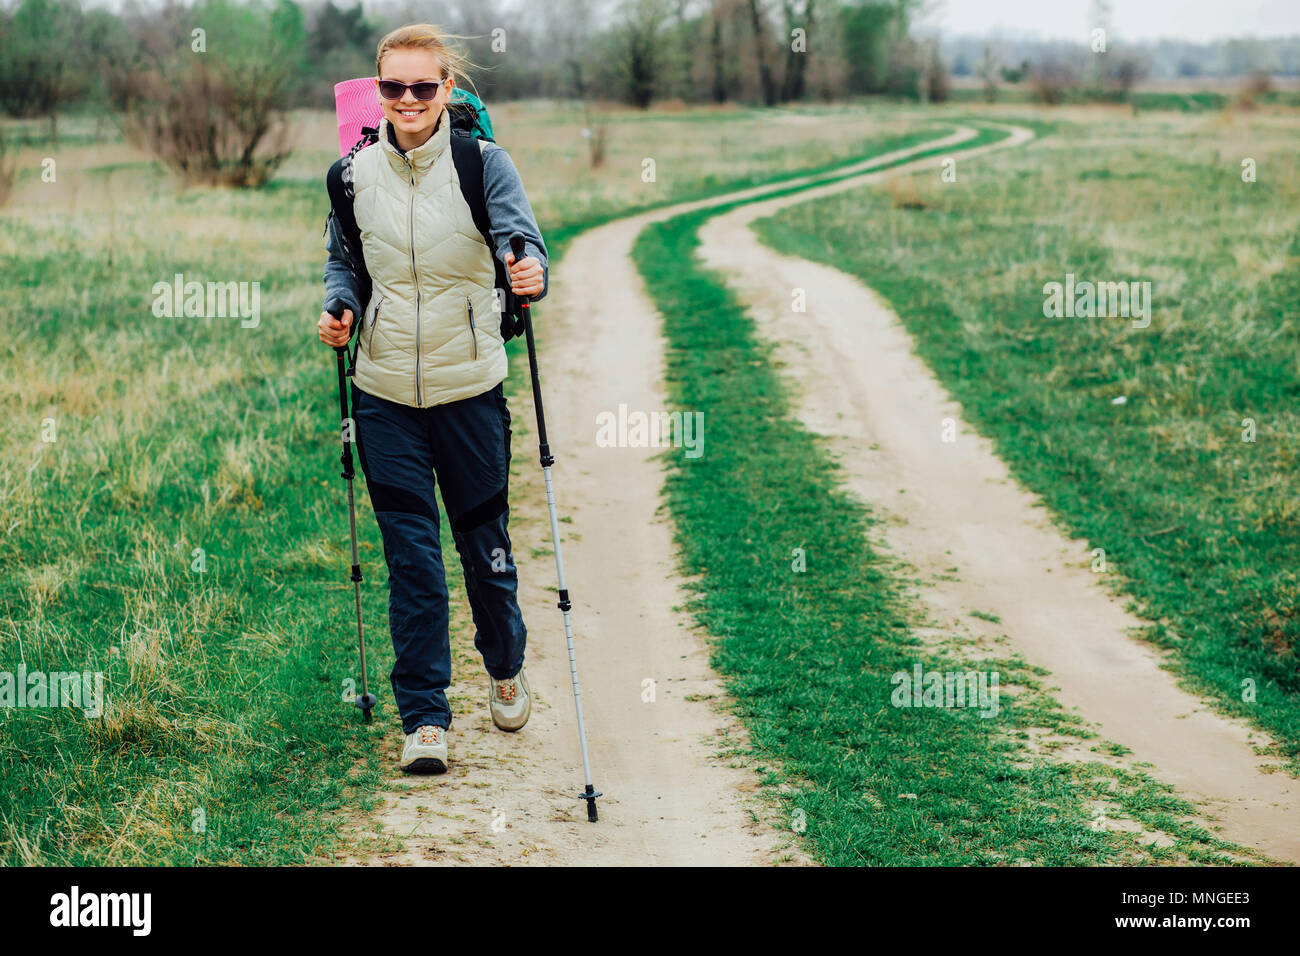 Caucasian woman hiking on rural trail Stock Photo